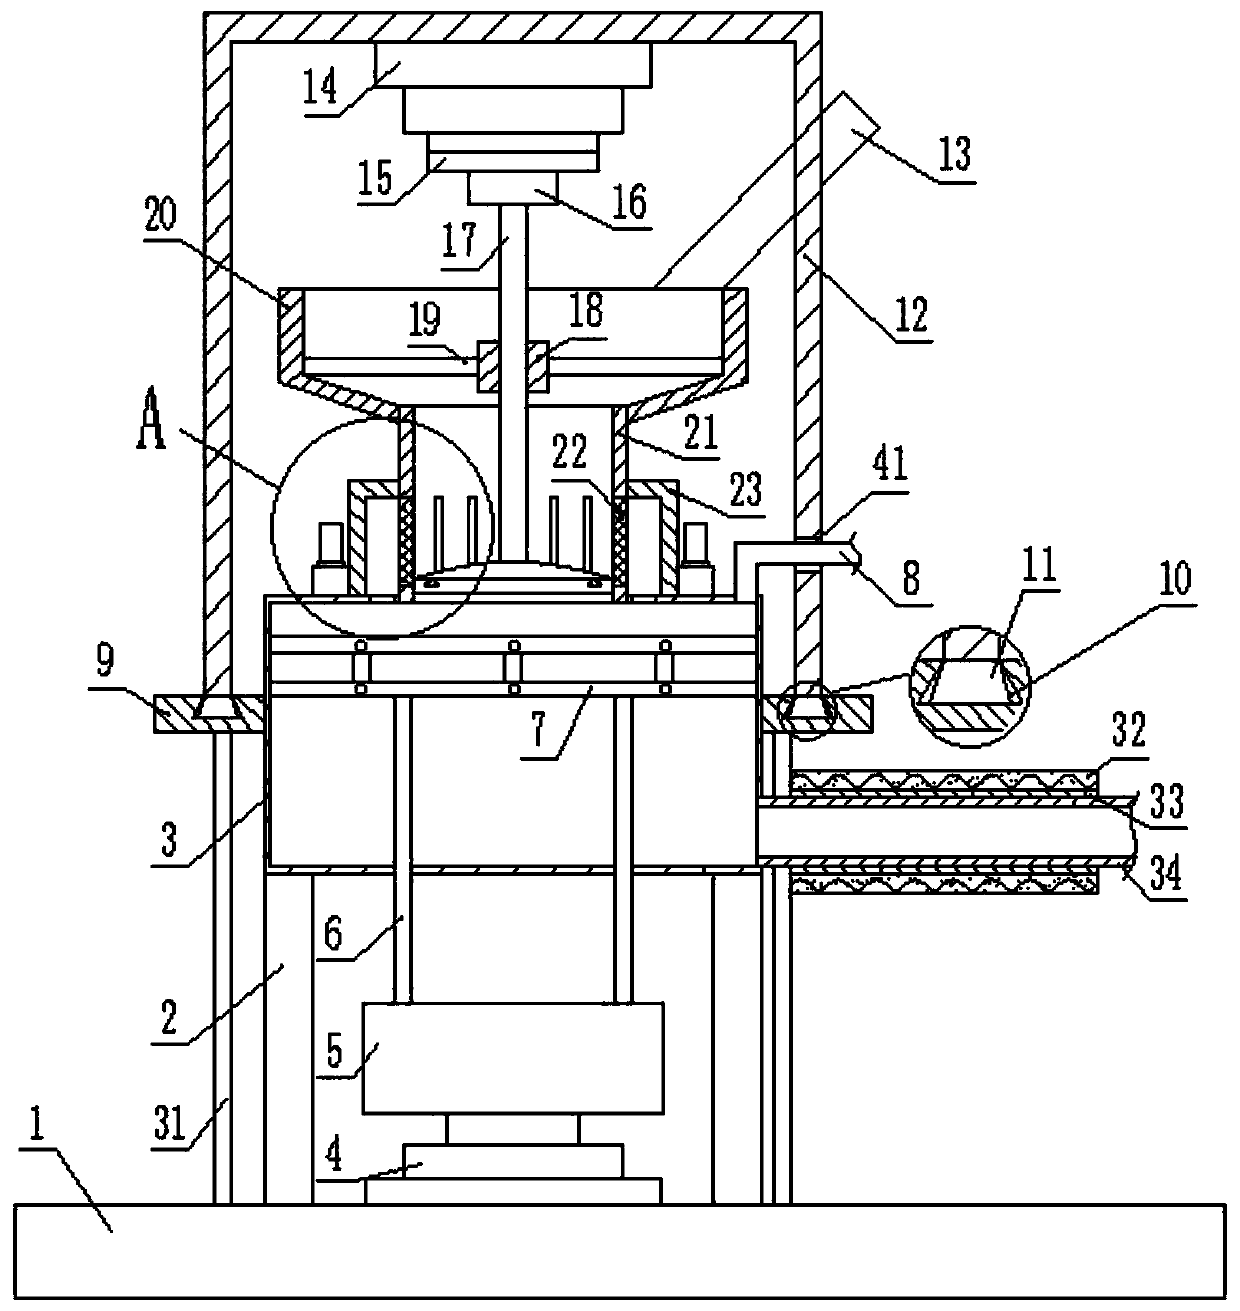 Glass fiber drawing machine with uniform heating